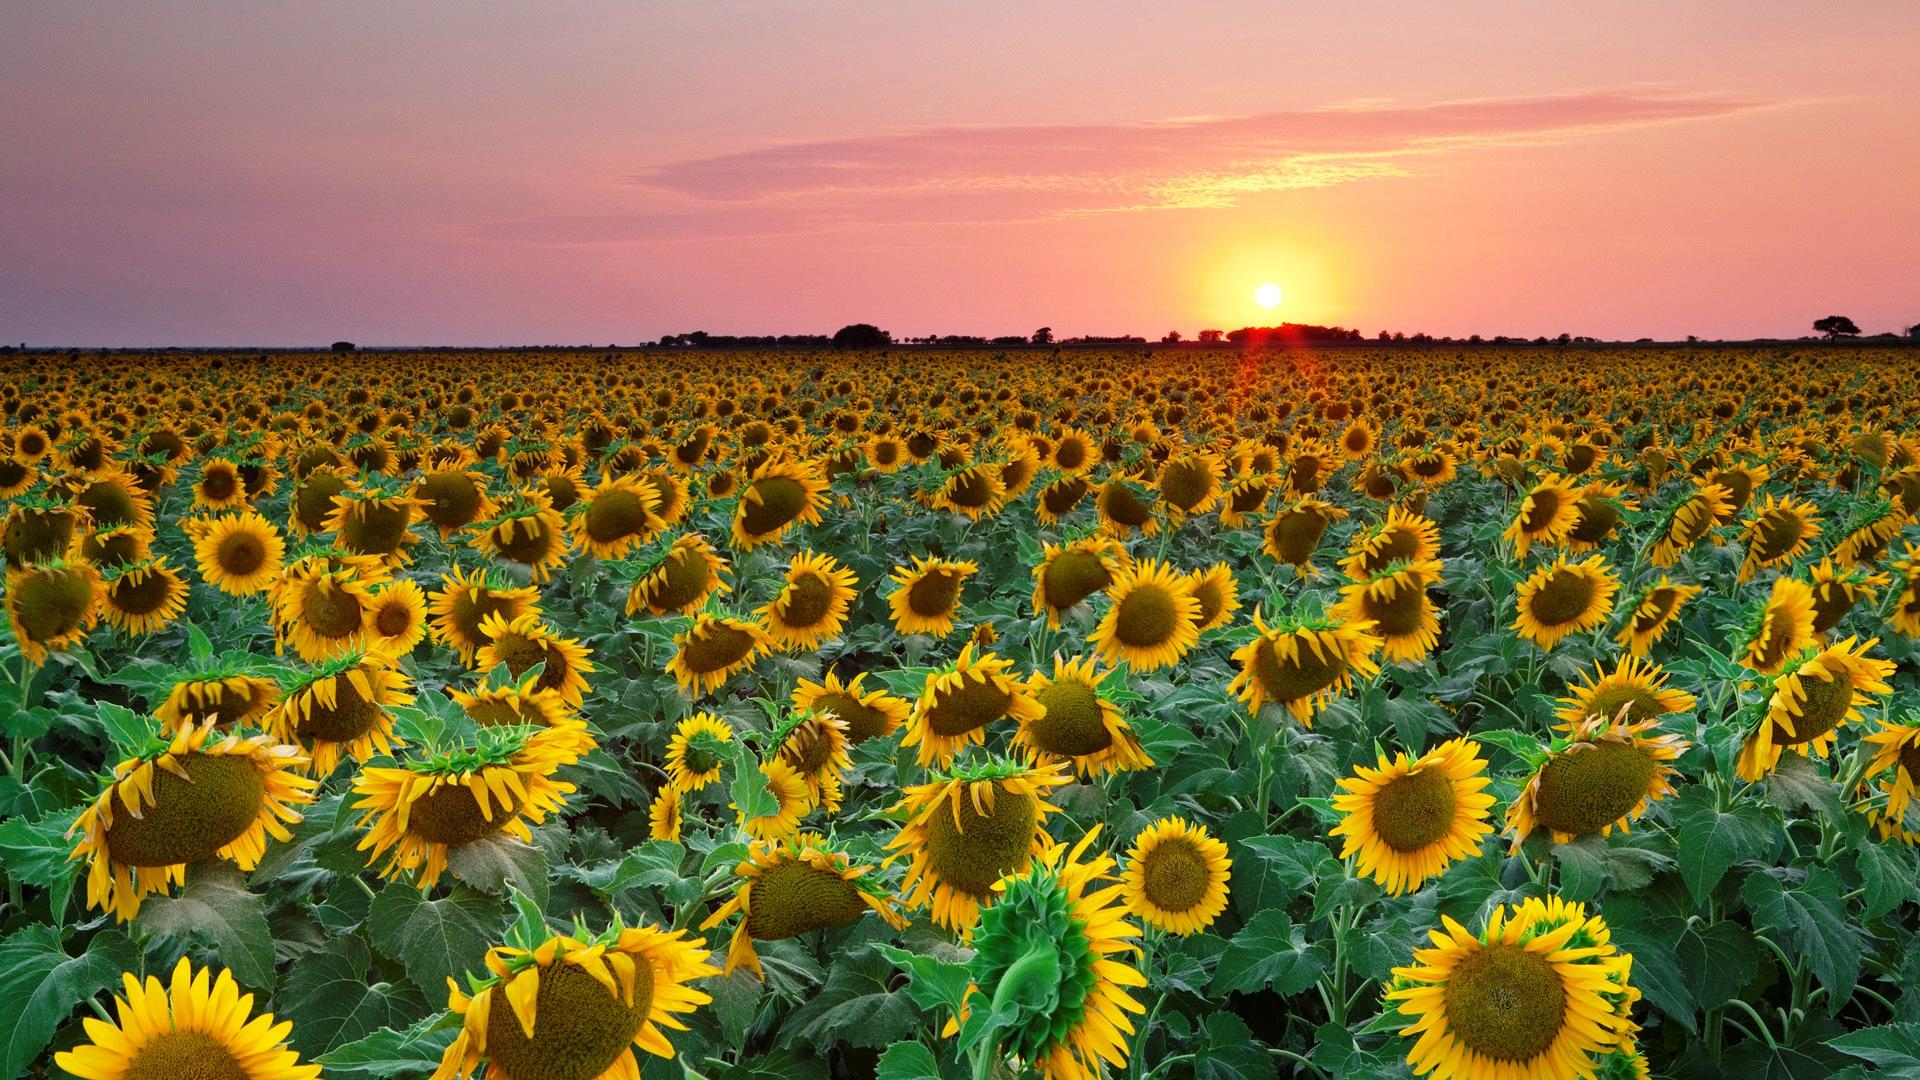 Sunflower Sunset Wallpaper For iPhone Of Sunflowers